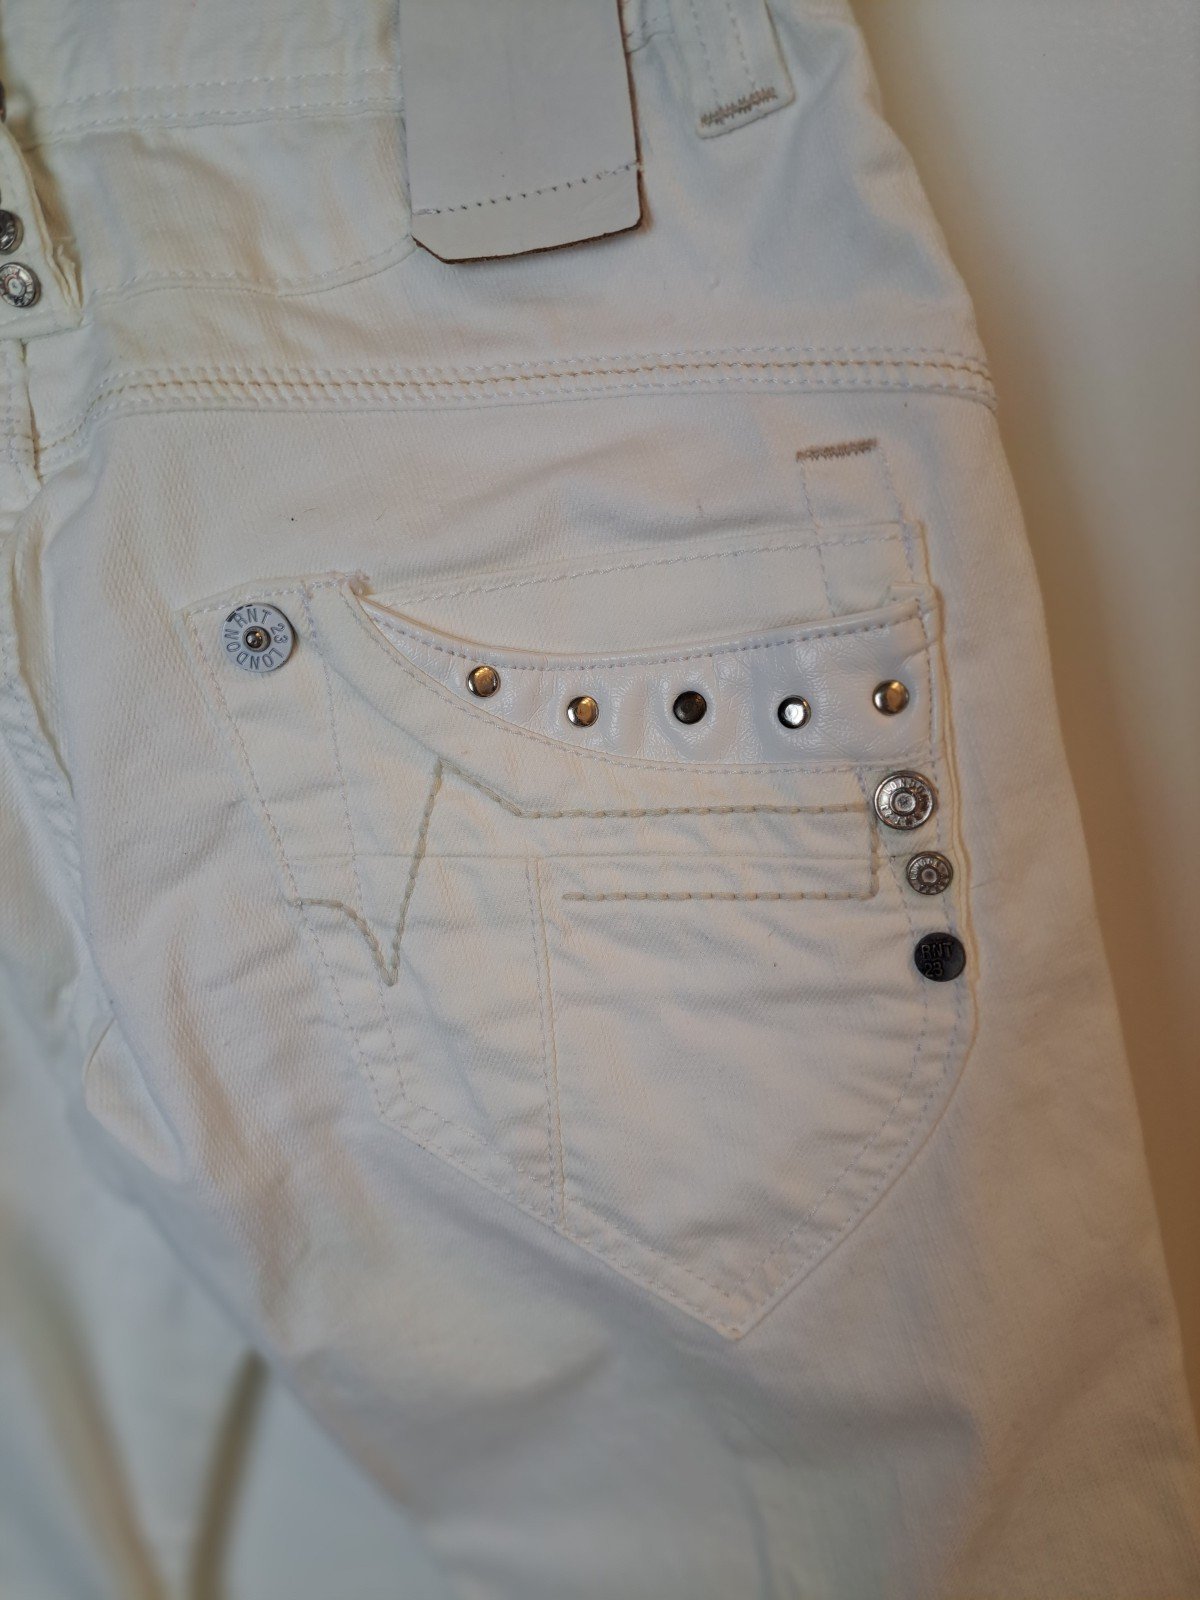 Cheap RNT 23 biker new white studded button front jeans cotton IRhgc2cTe Great